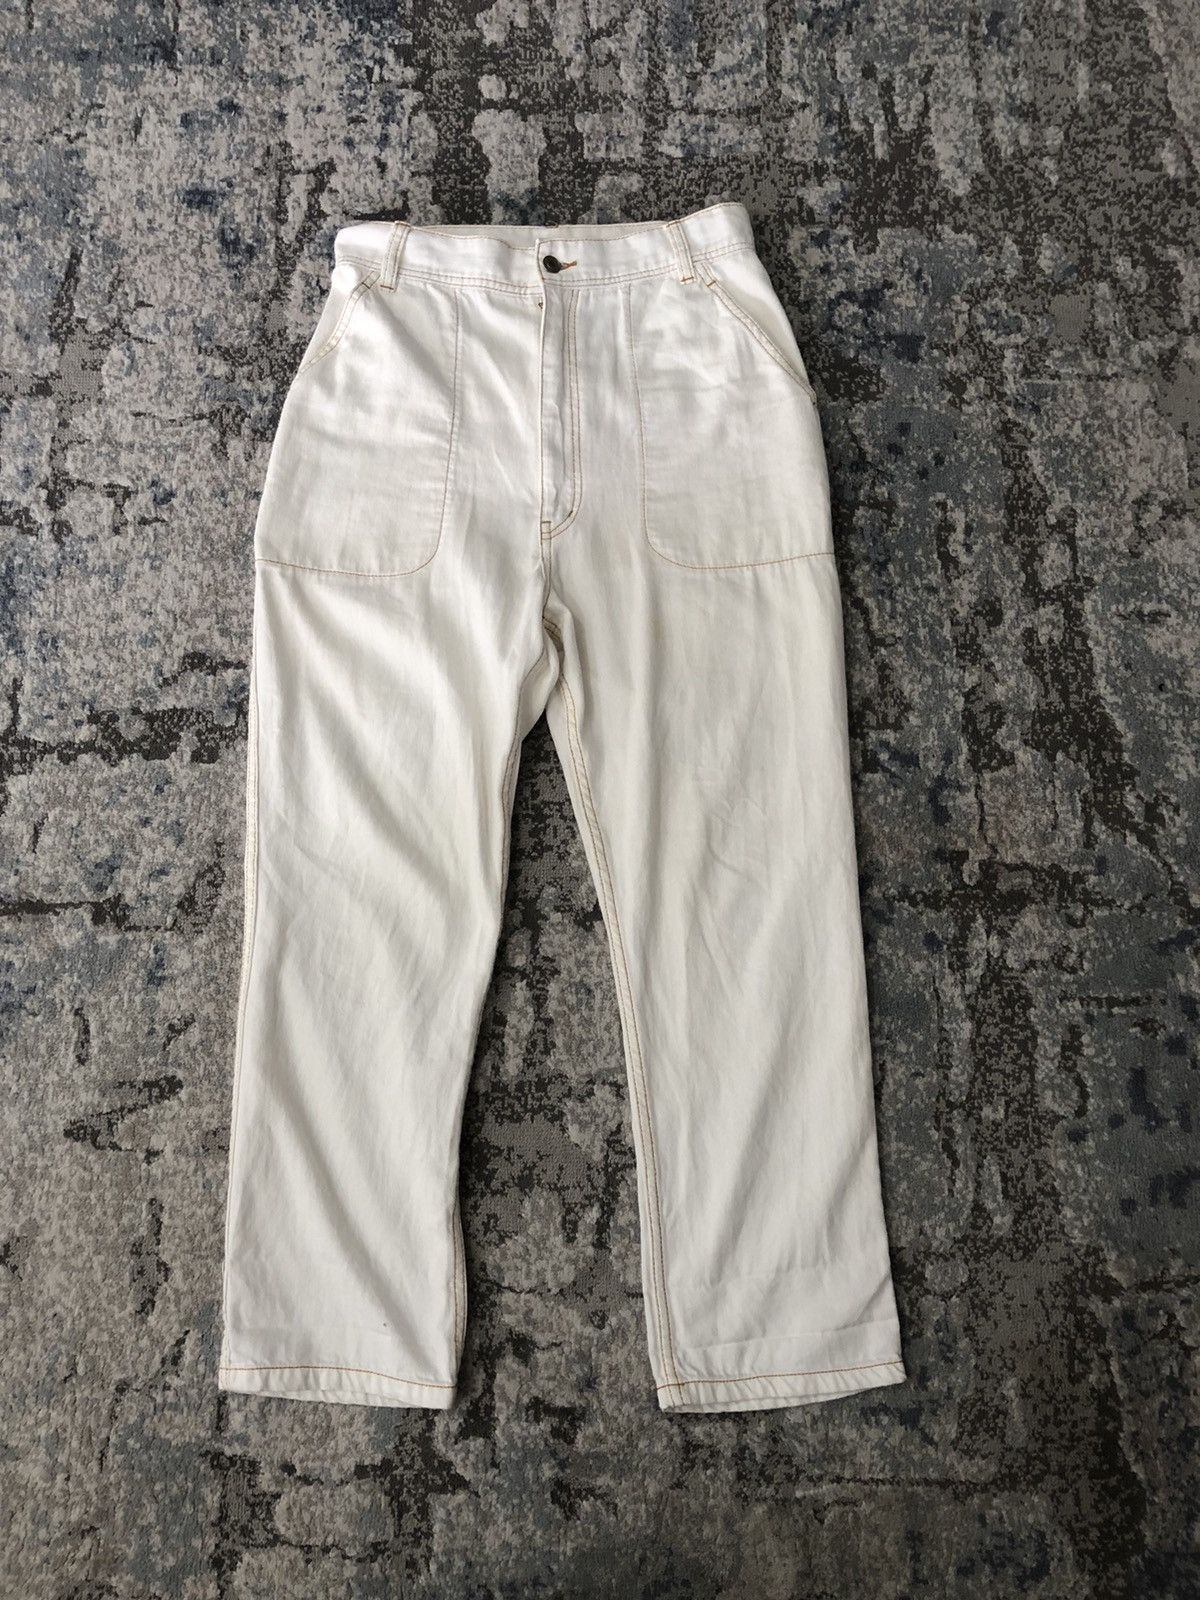 Issey Miyake MERCIBEAUCOUP by Issey Miyake Insane Jeans Size US 30 / EU 46 - 3 Thumbnail